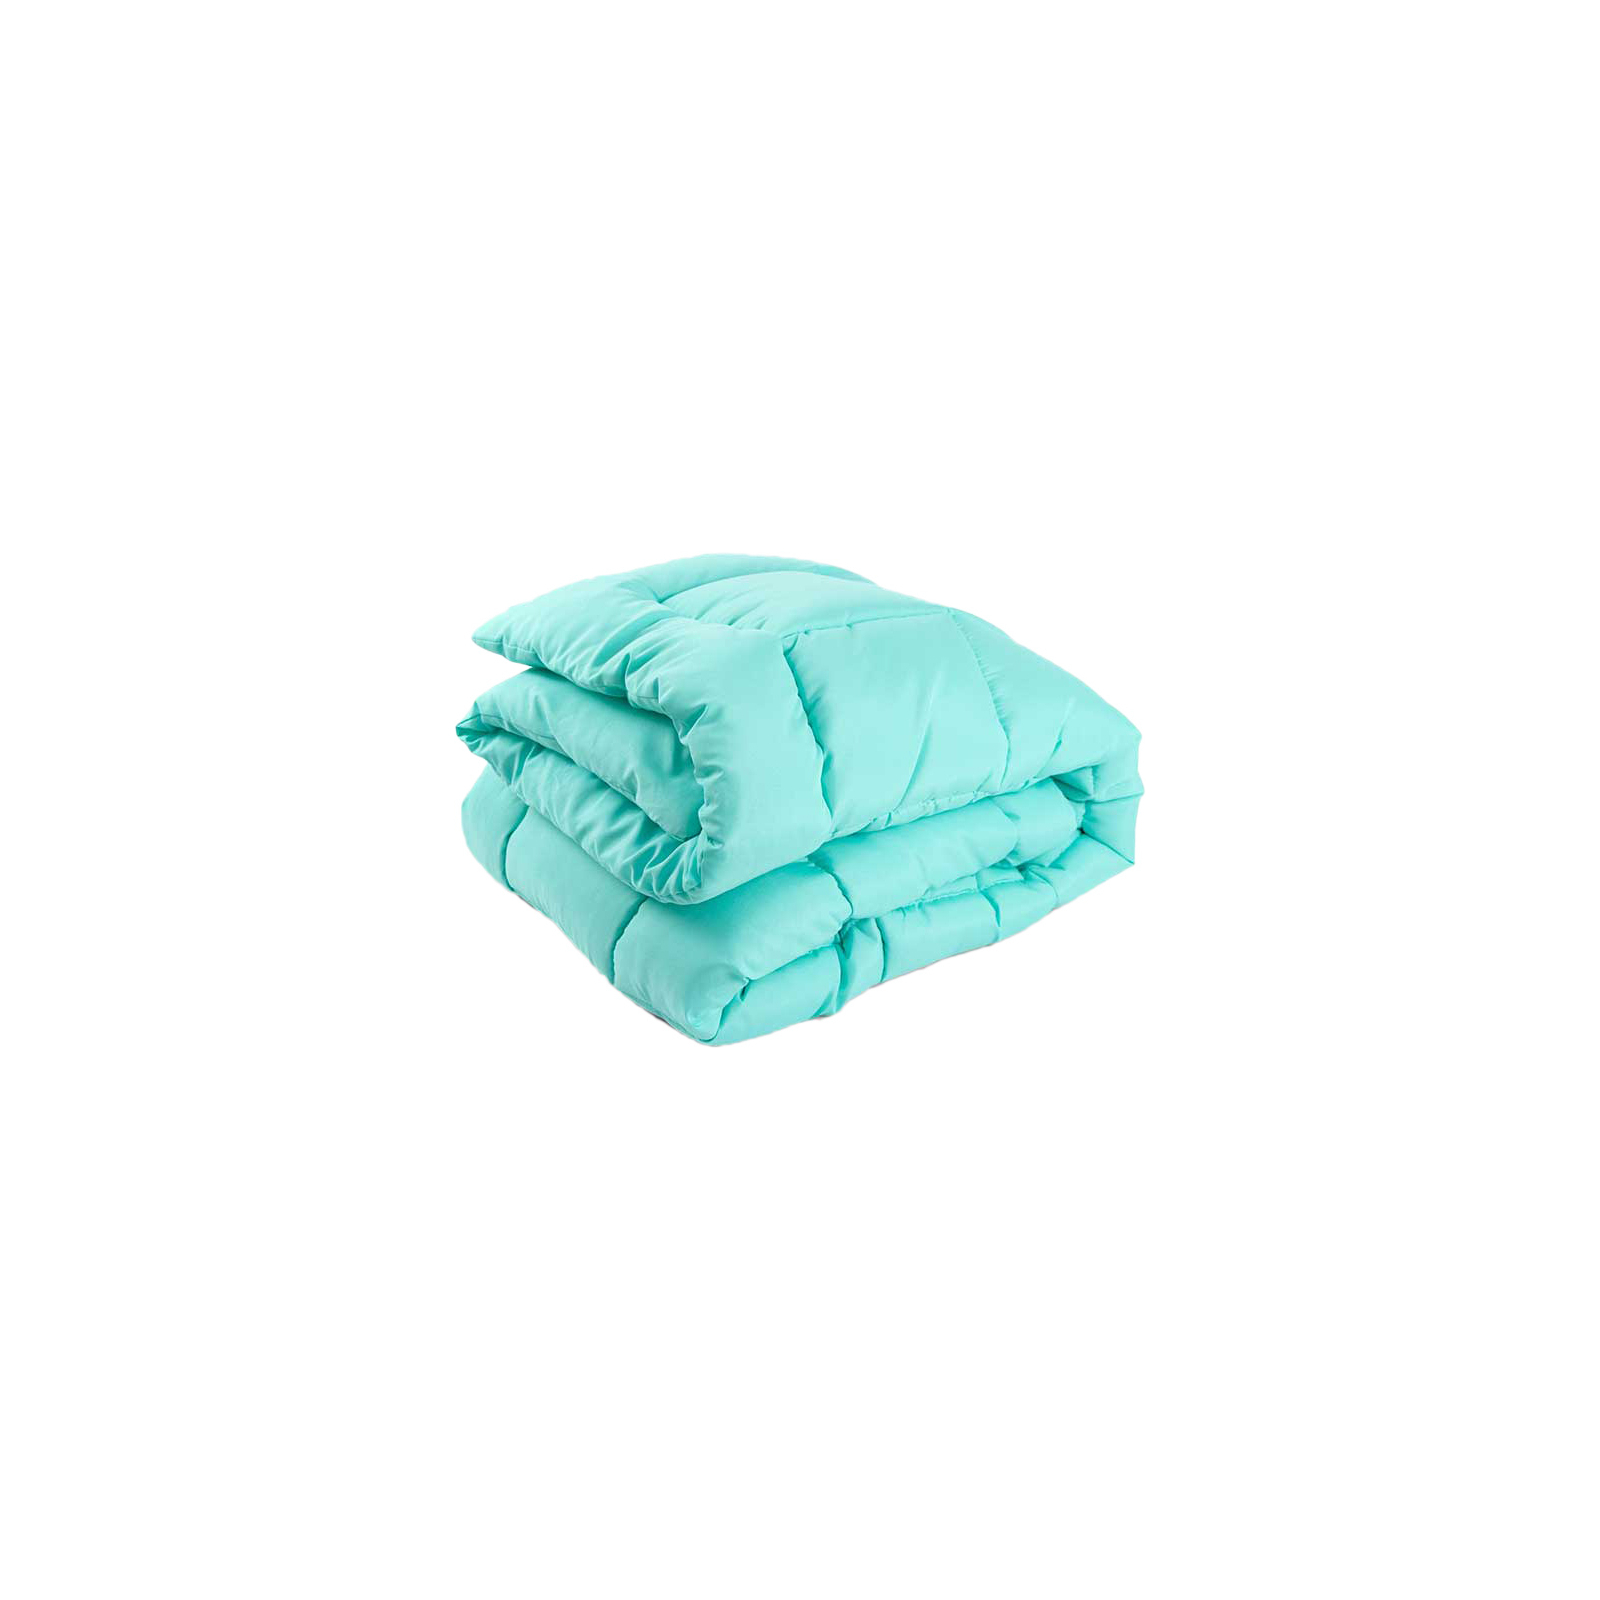 Одеяло Руно силиконовое Mint зима 140х205 (321.52_Mint)